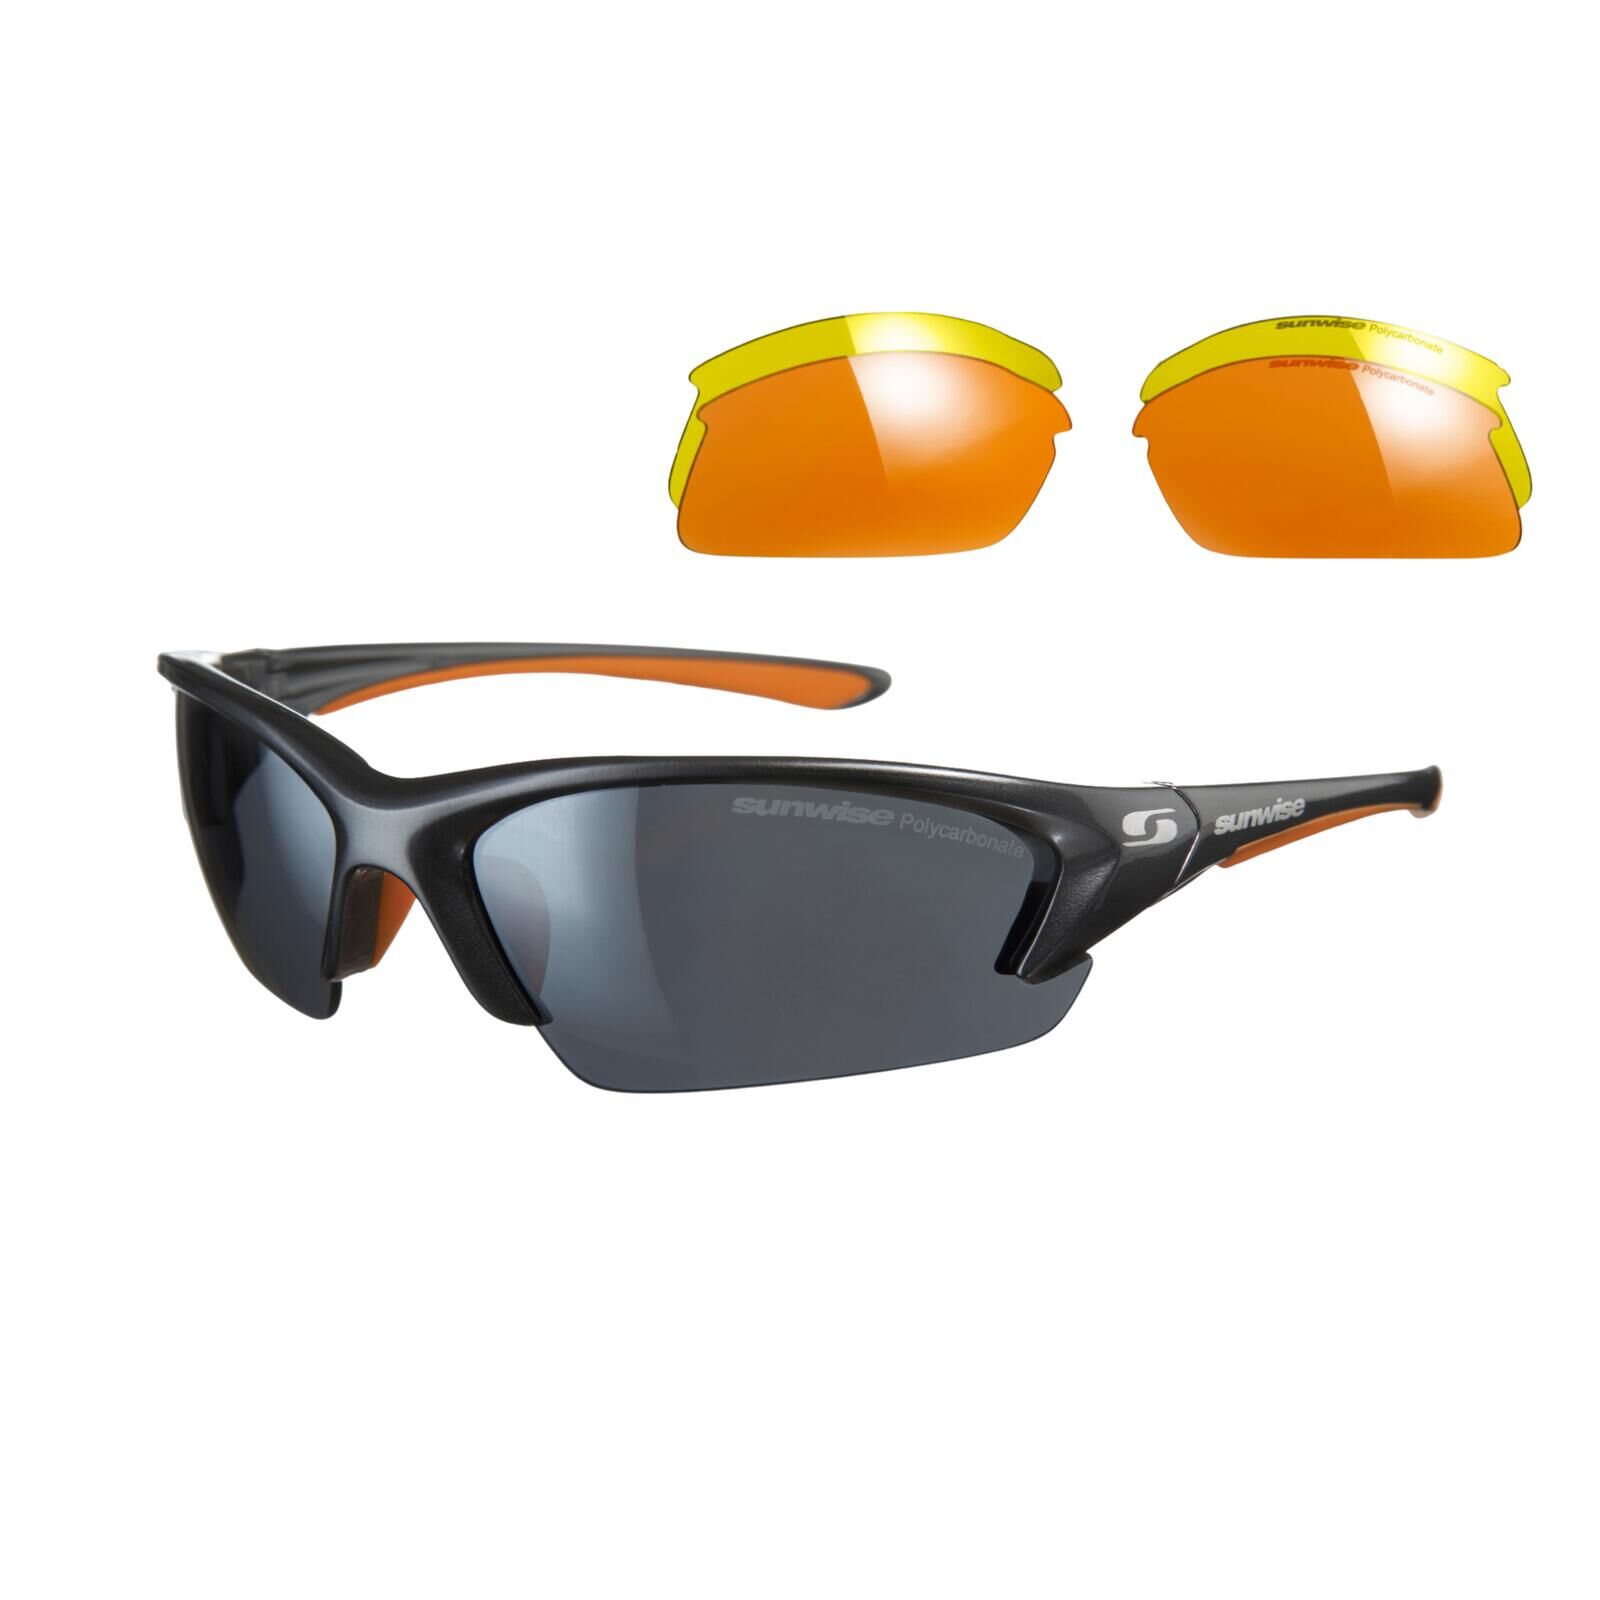 SUNWISE Equinox Sports Sunglasses - Category 1-3